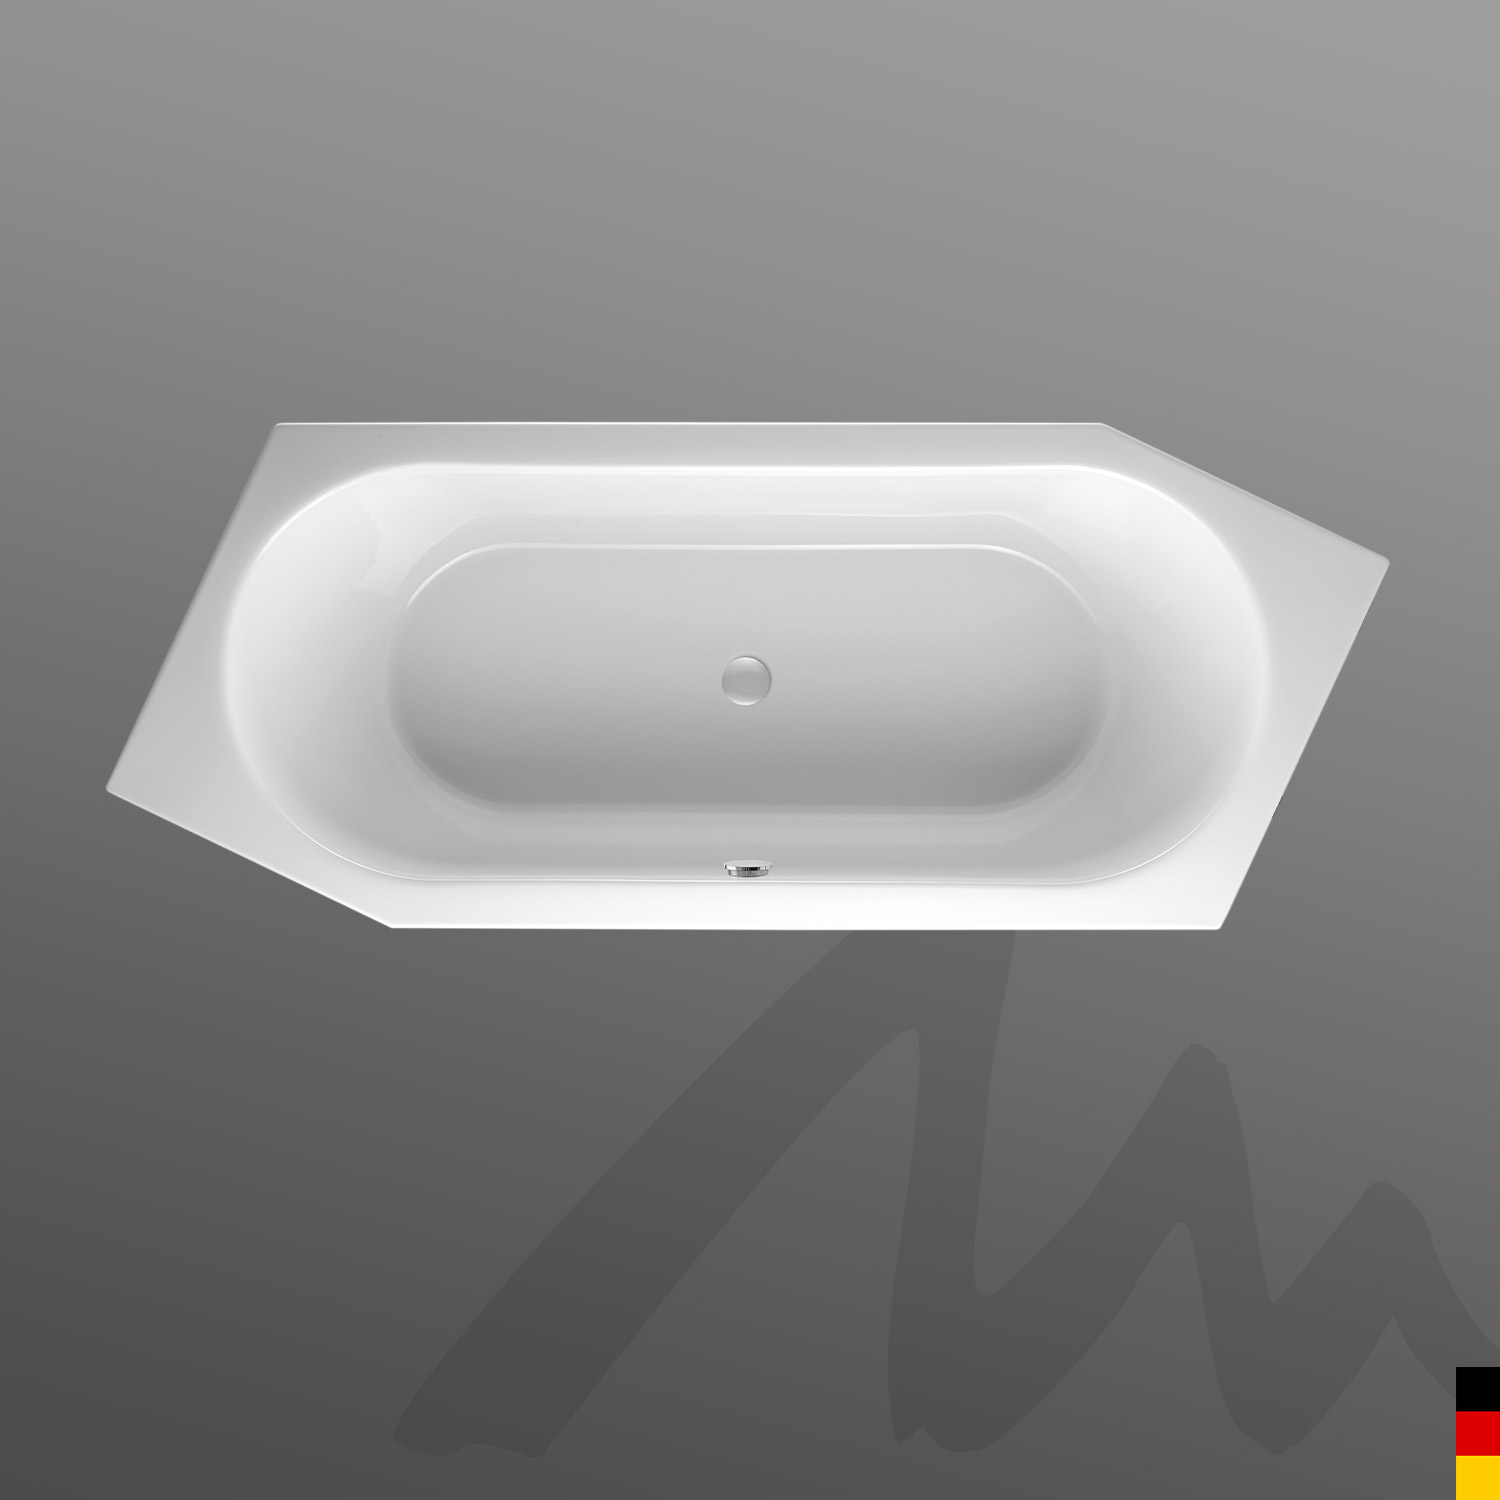 Mauersberger Badewanne 6-Eck Ovata 210/90  210x90x45cm  Farbe:weiß